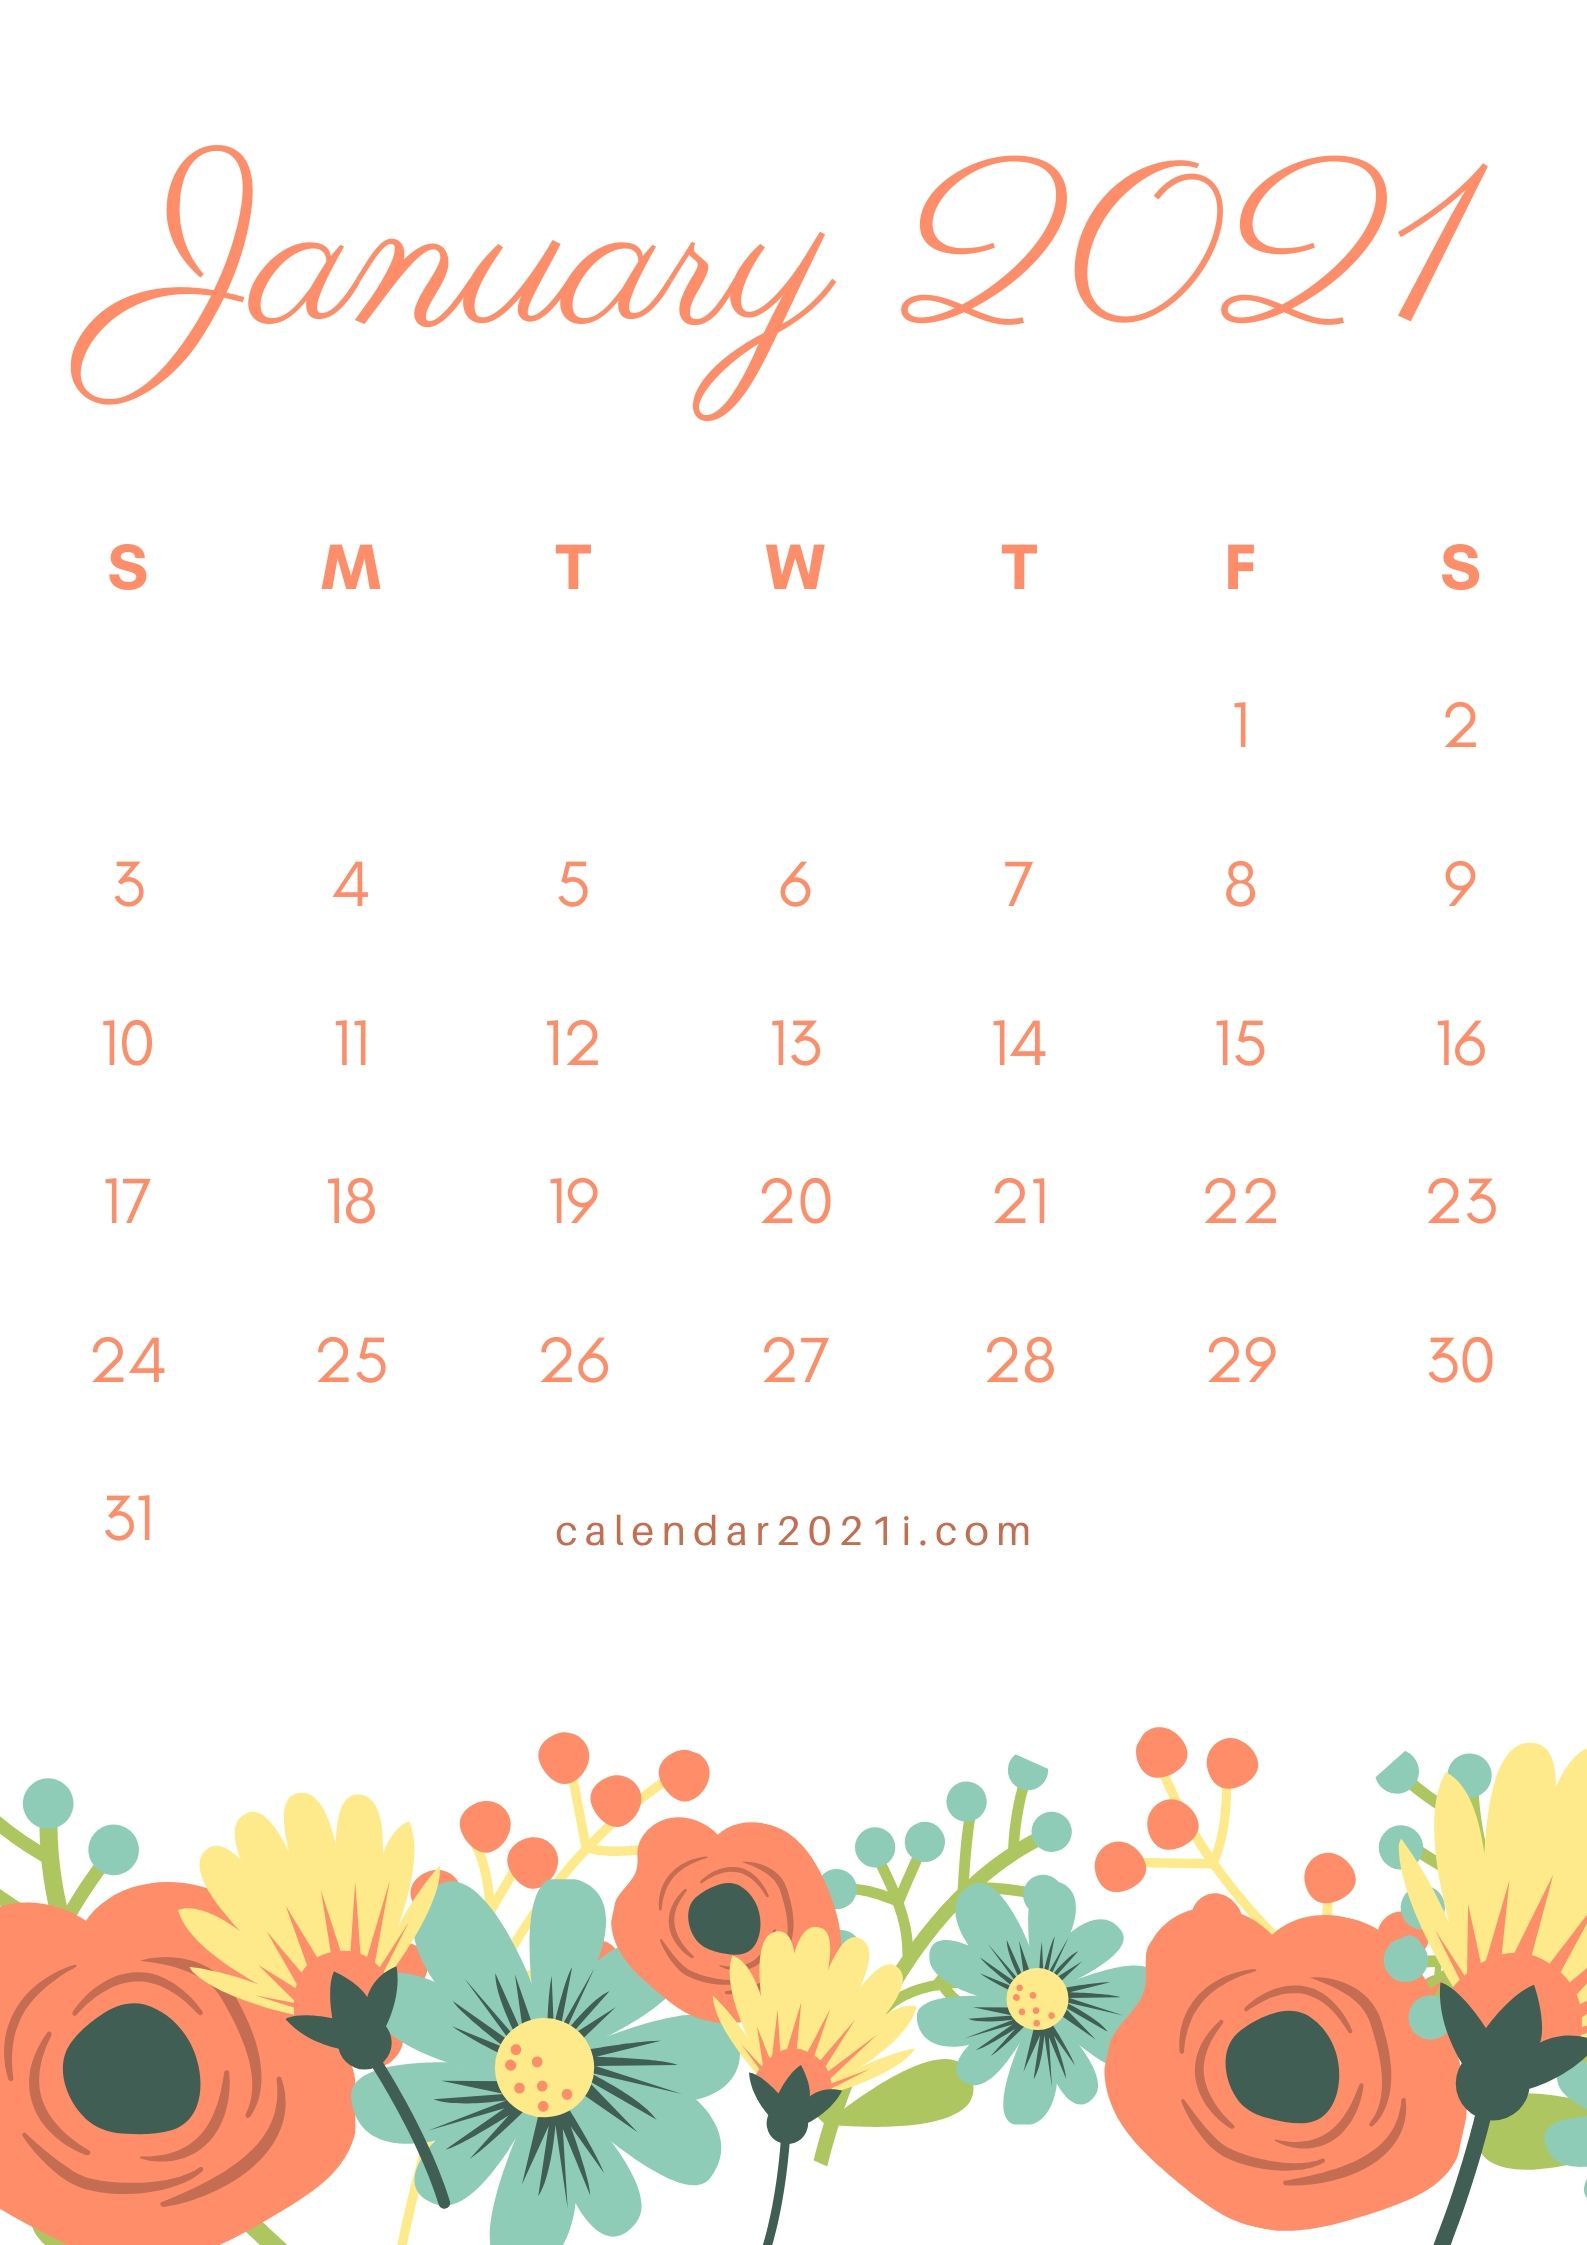 January 2021 Calendar: Printable, Wallpaper, Floral, Holidays & More